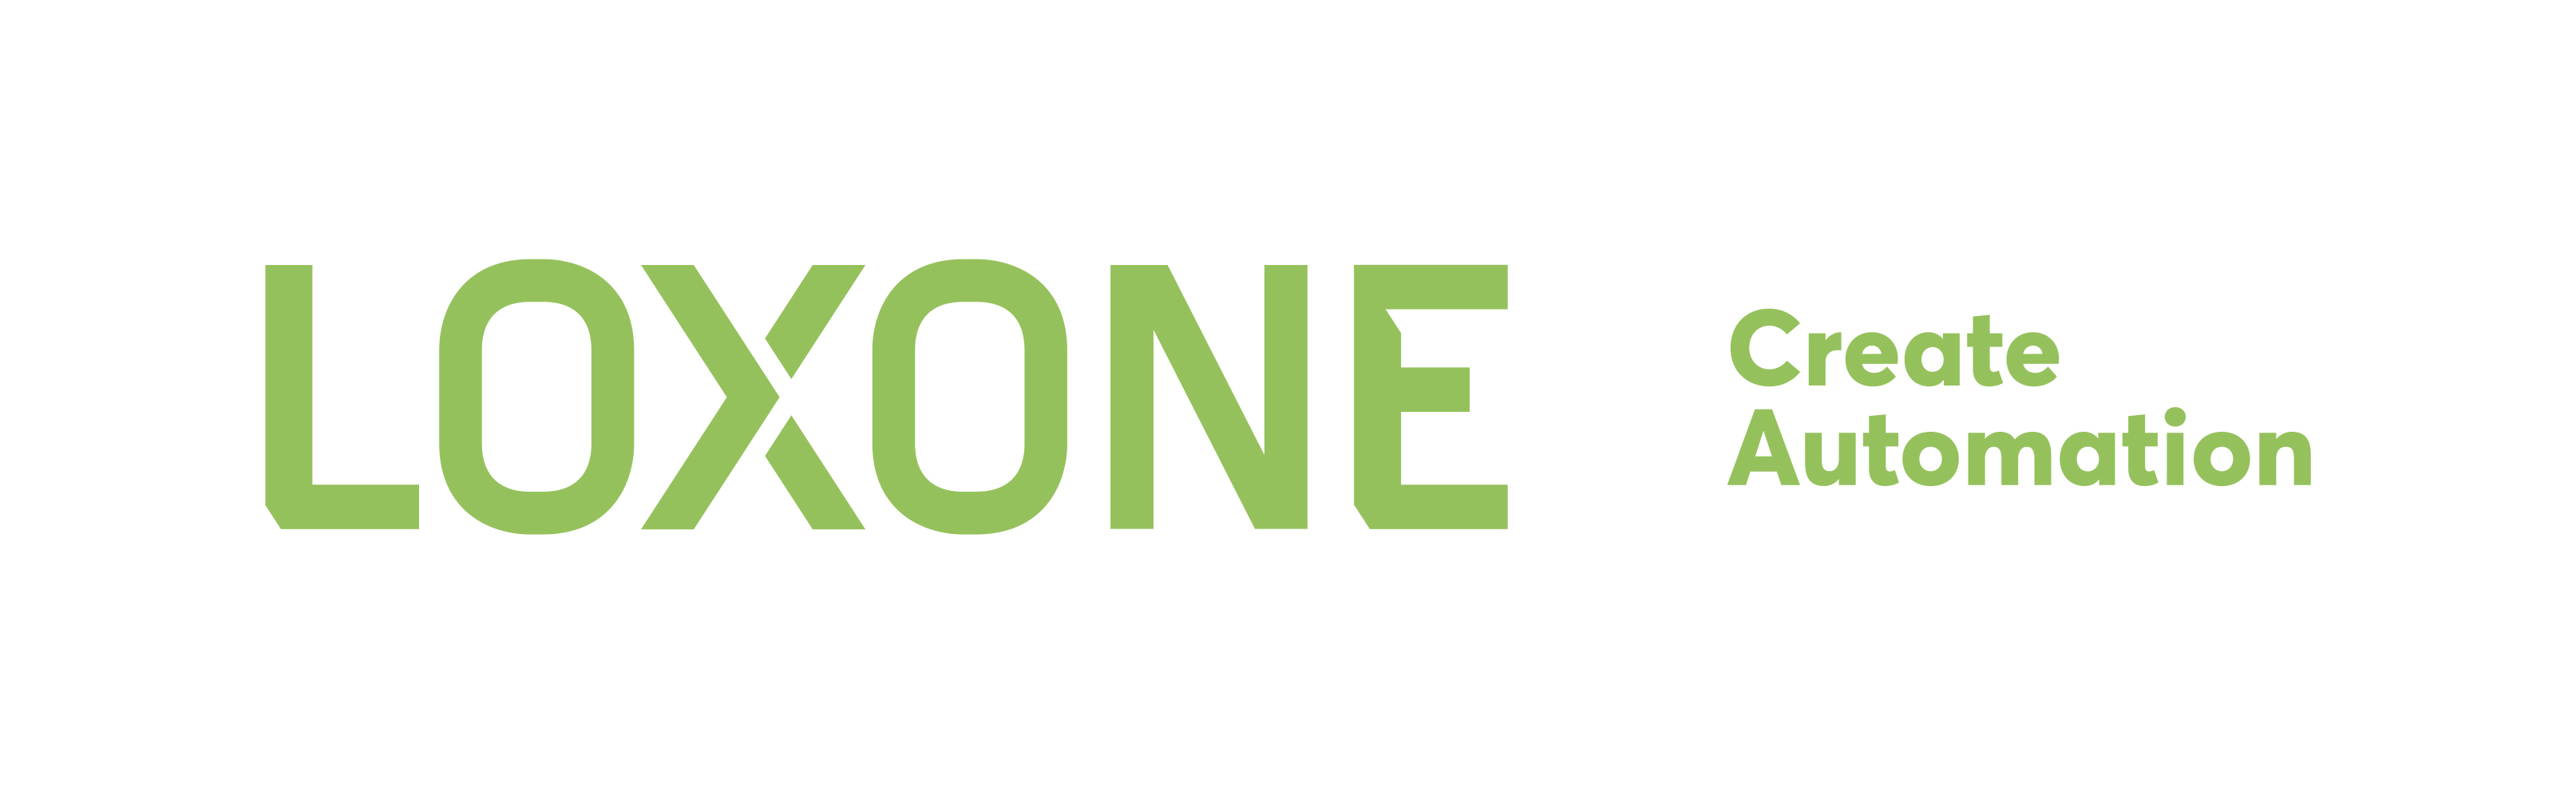 Logo-Loxone-Create-Automation-Web.jpg